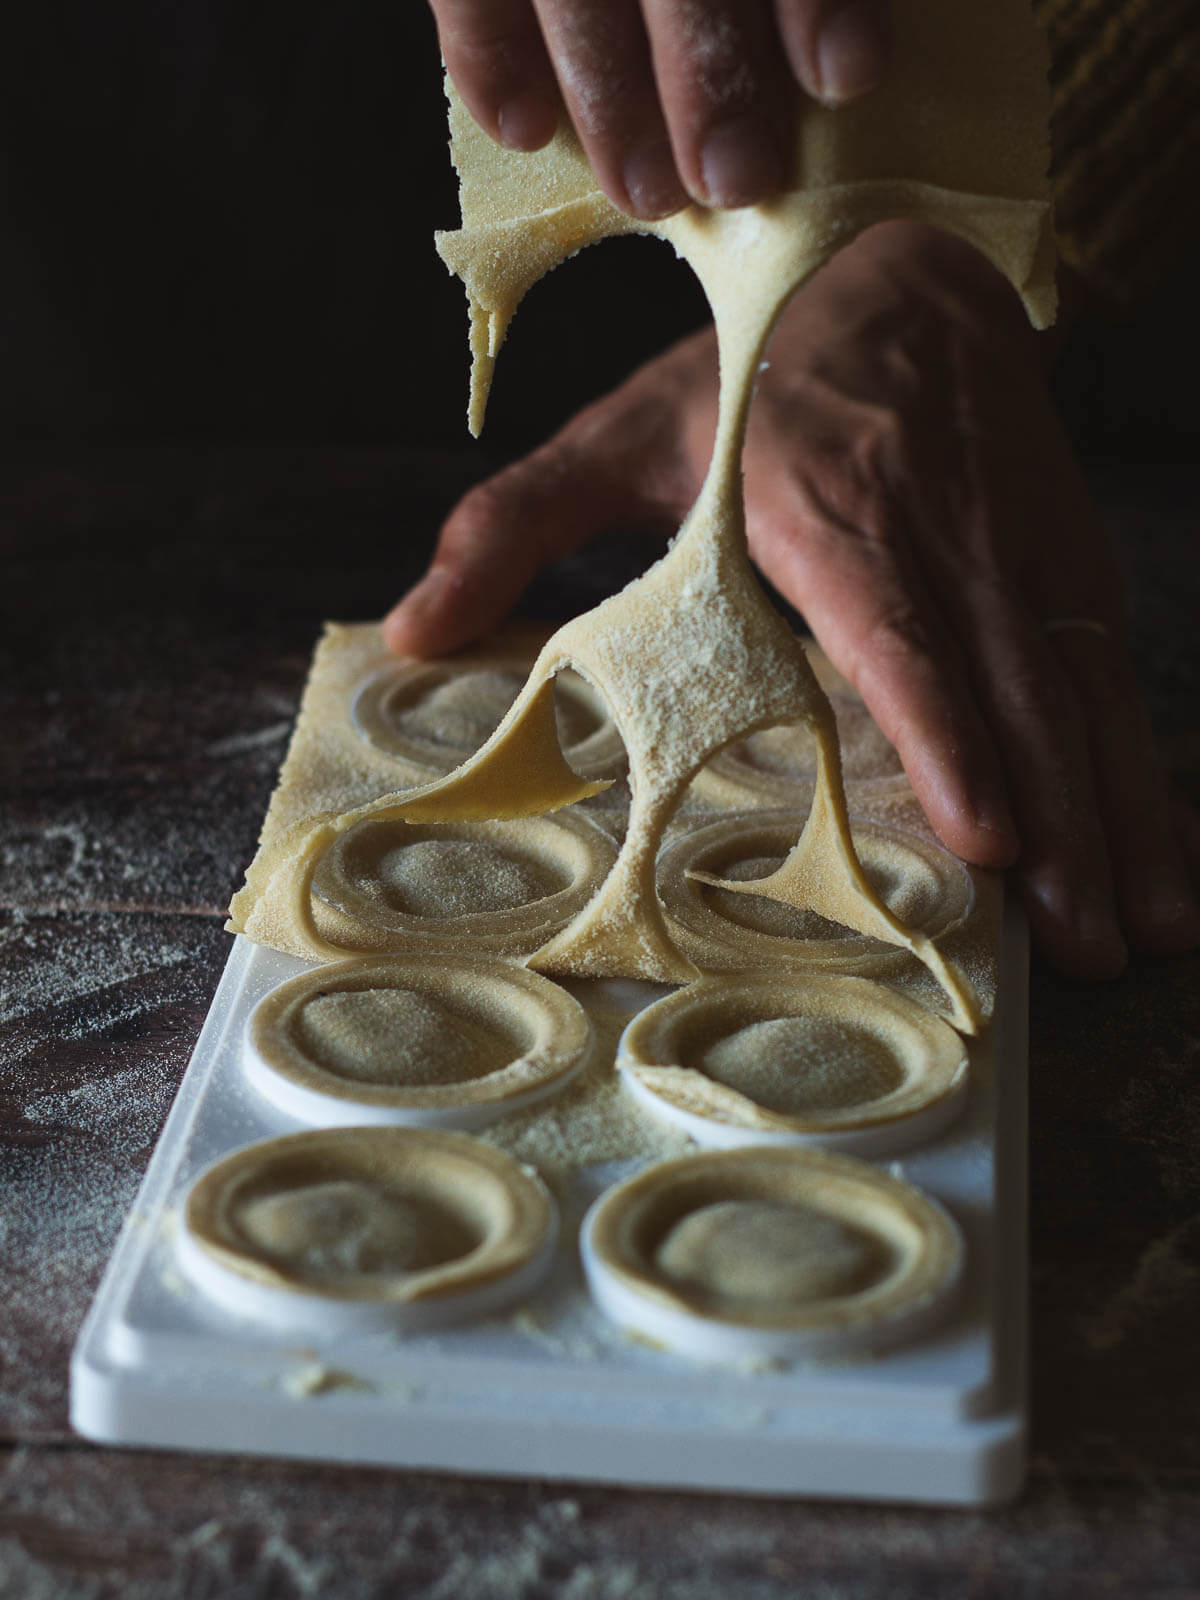 remove the remaining pasta dough